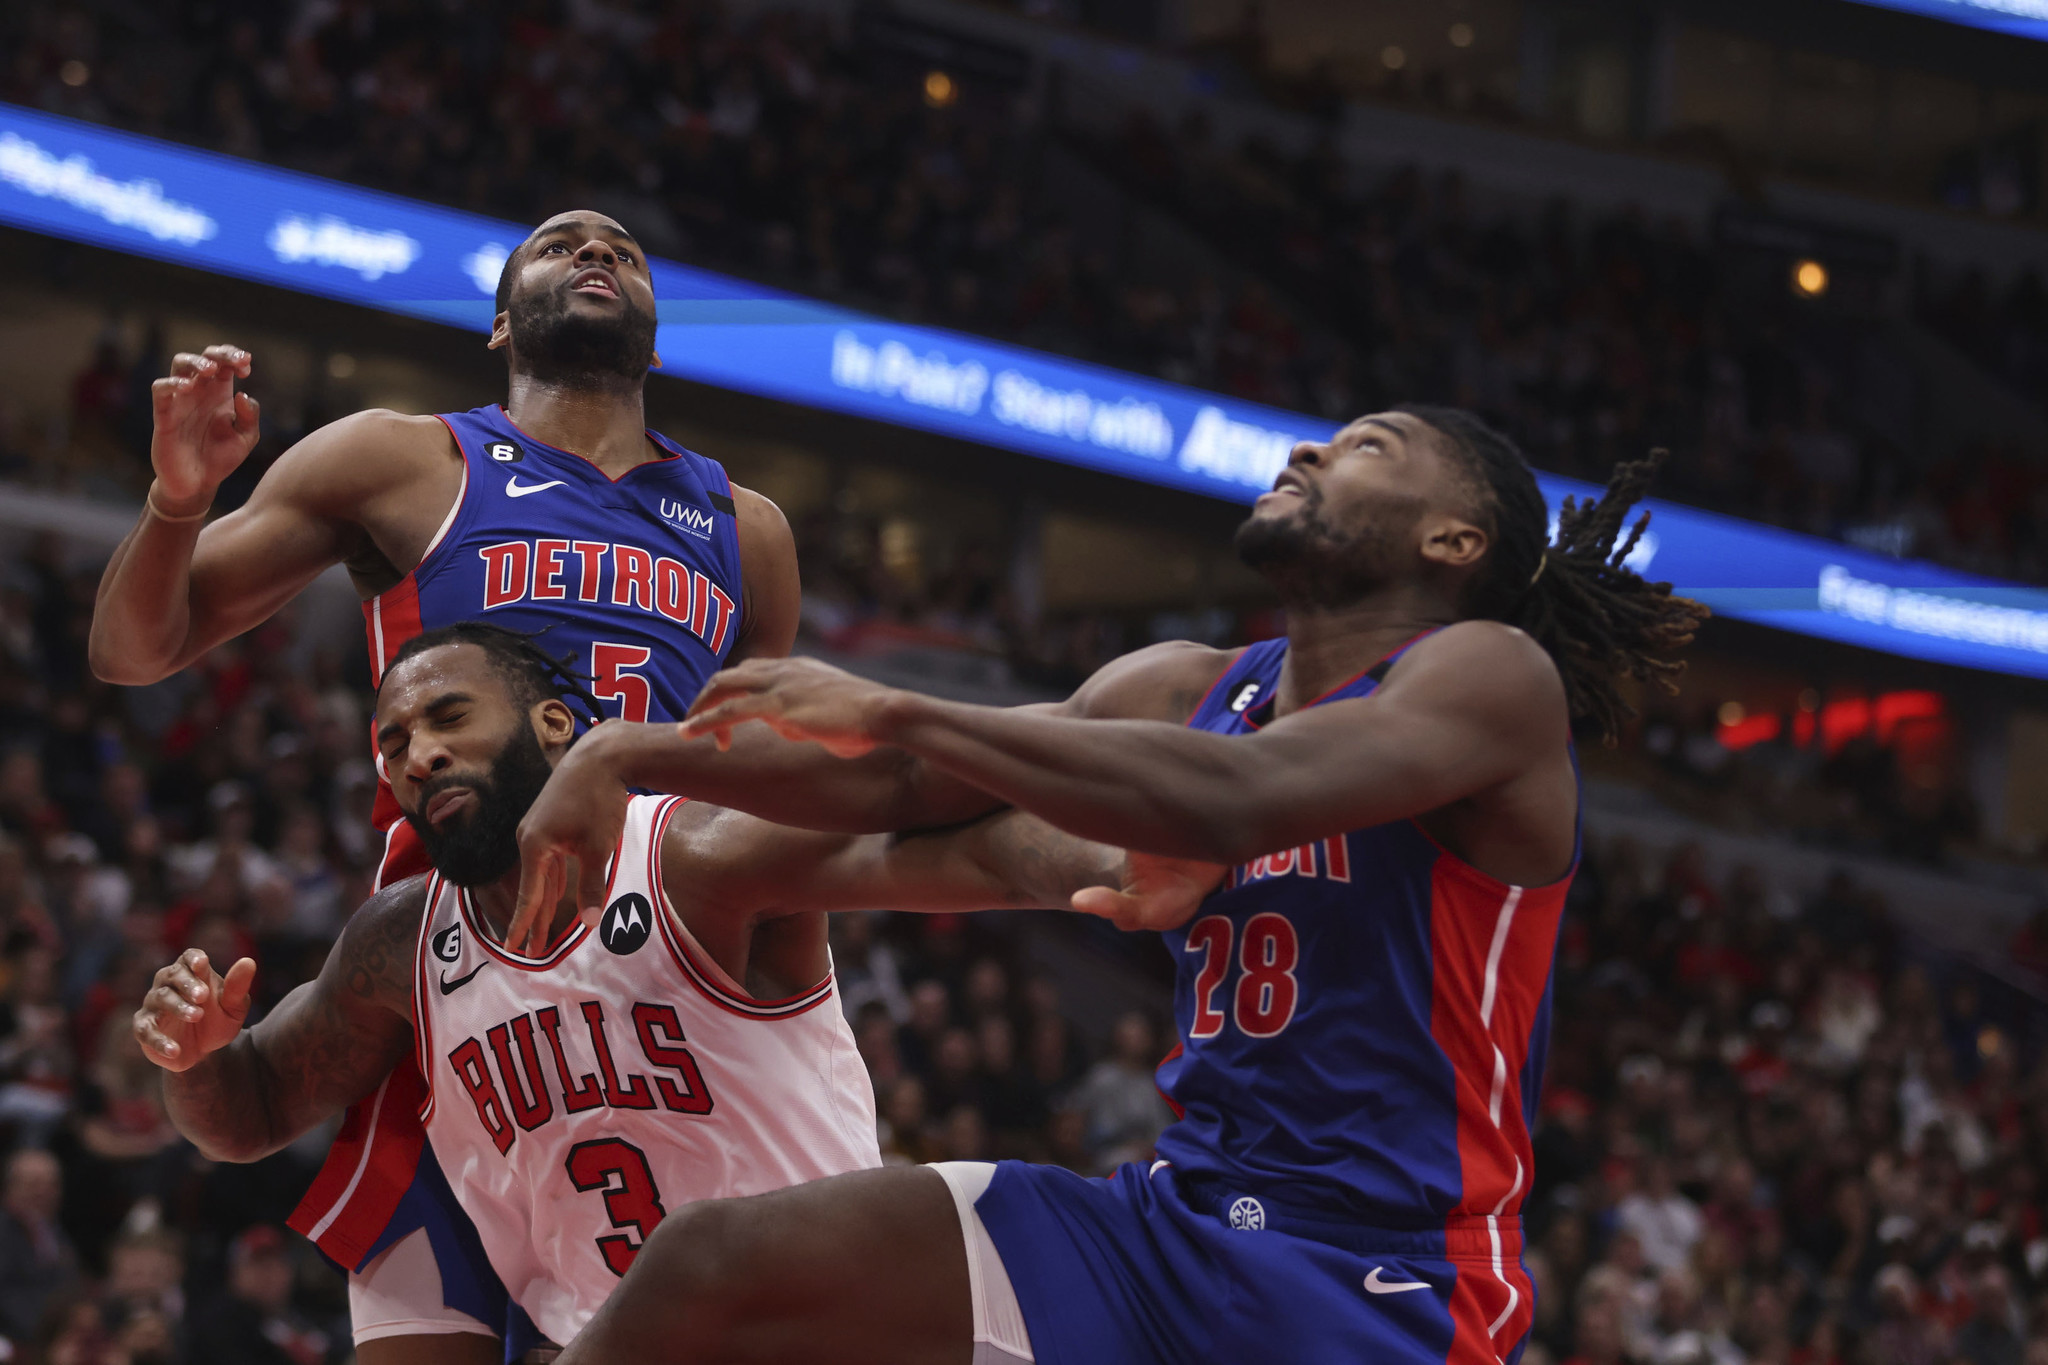 Chicago Bulls guard Michael Jordan goes up for a reverse layup